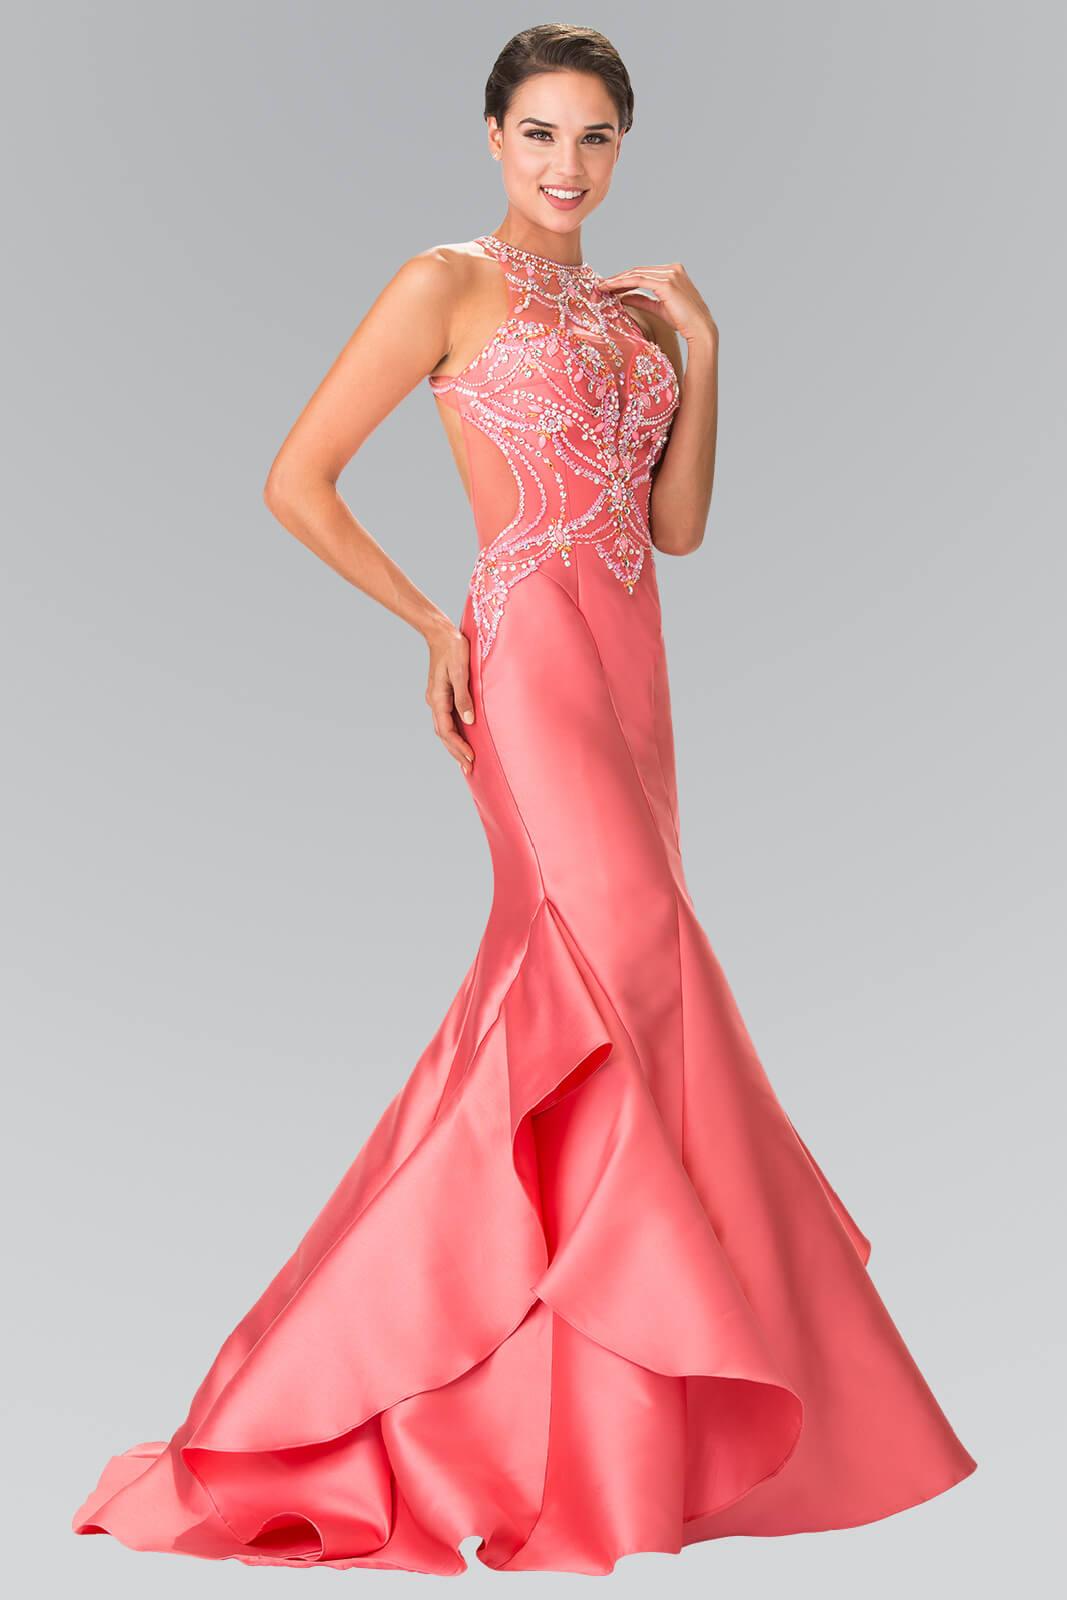 Prom Long Formal Halter Dress Mermaid Gown - The Dress Outlet Elizabeth K